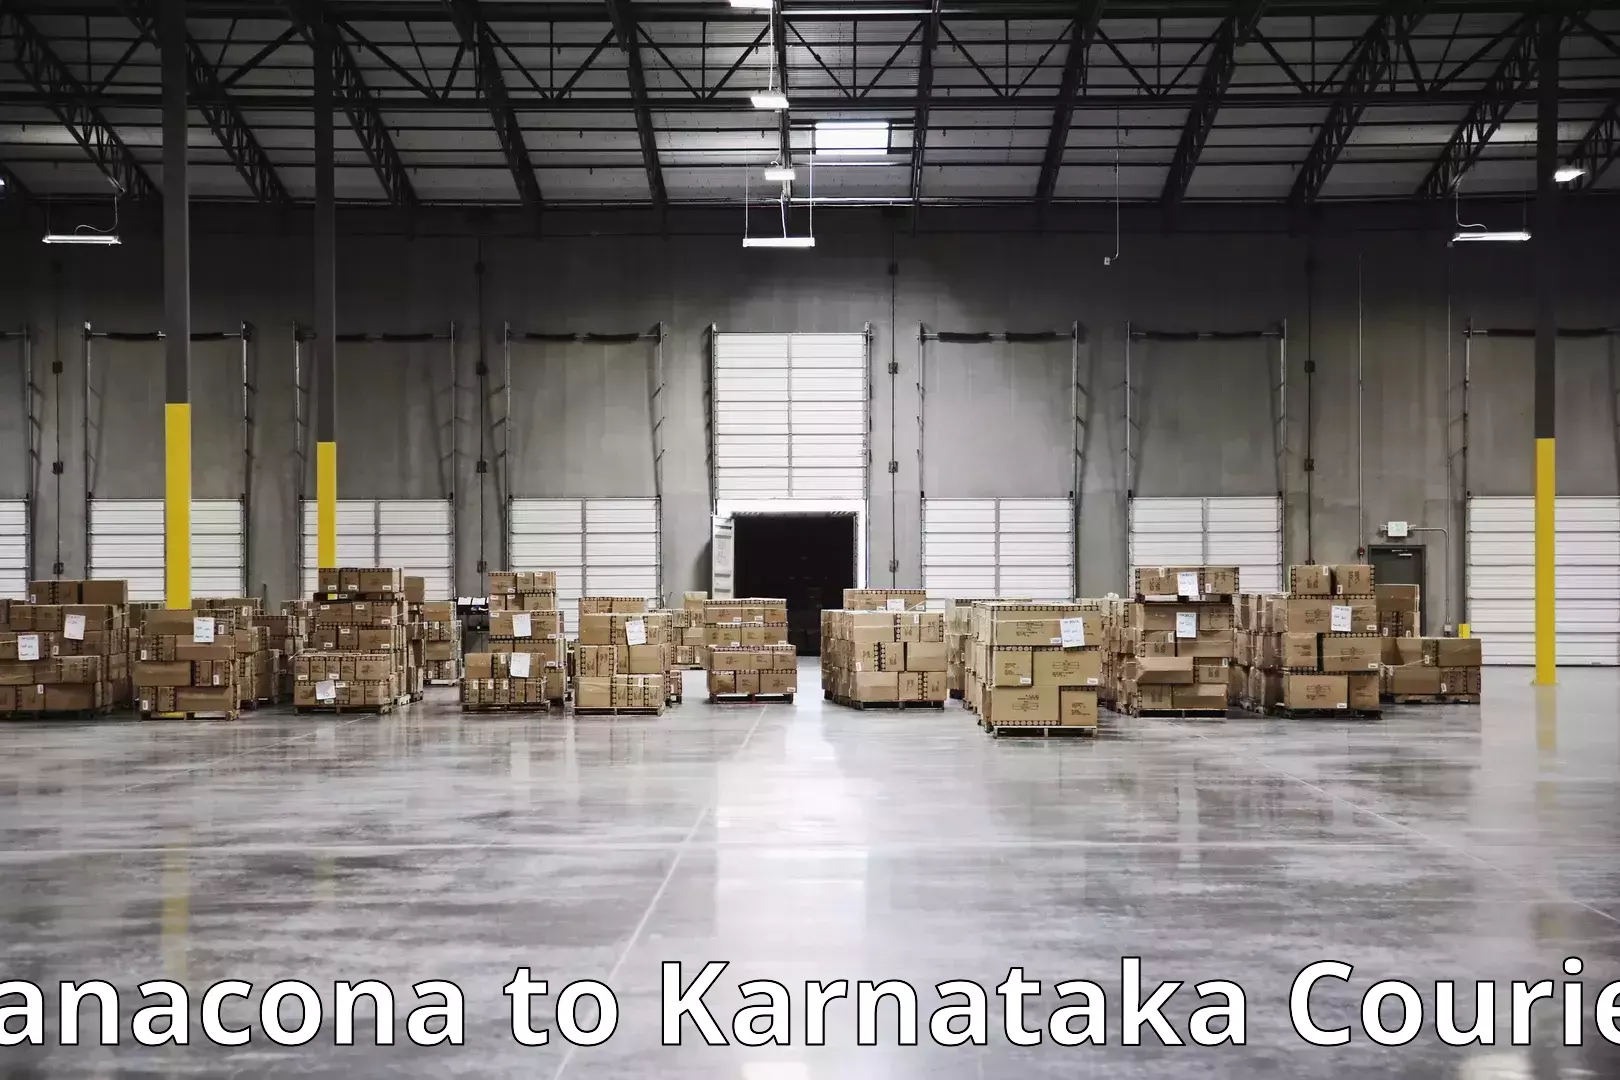 Moving and storage services Canacona to Karnataka